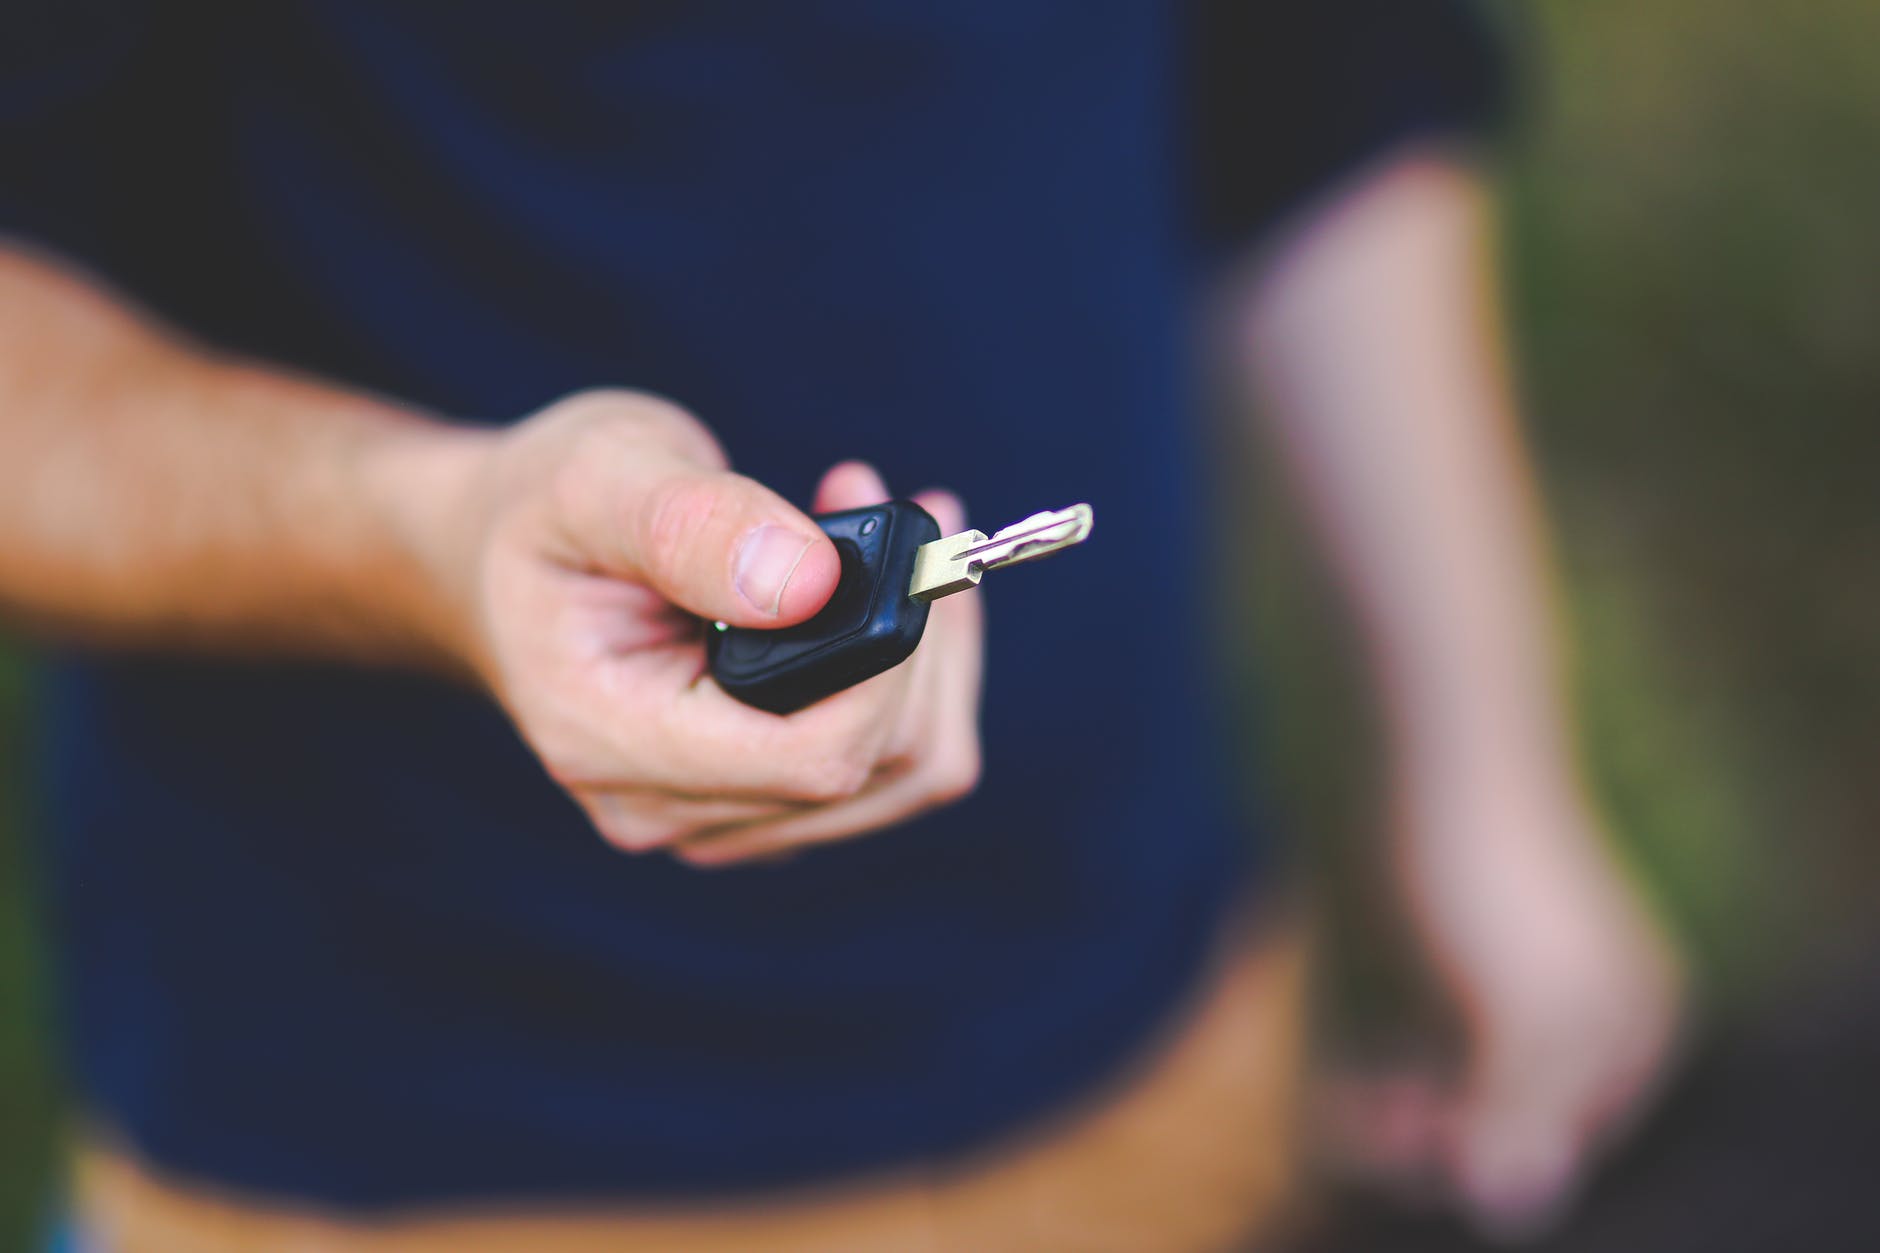 A hand holding a set of car keys | Source: Pexels